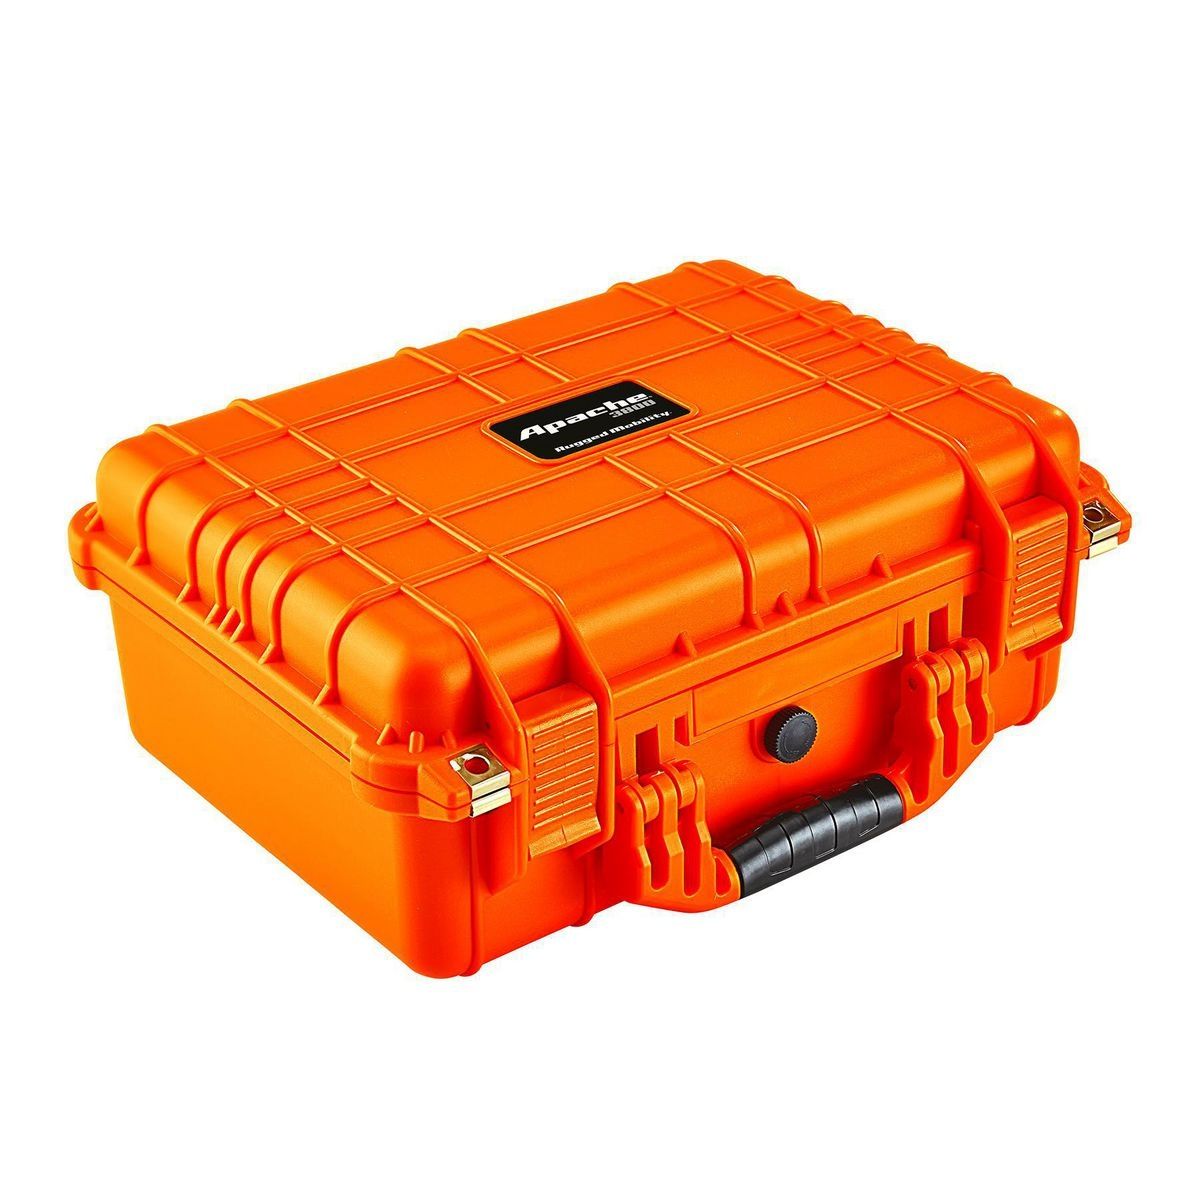 Orange Apache 3800 Weatherproof Protective Case, X-Large, Watertight, dust-tight, impact resistant protective case